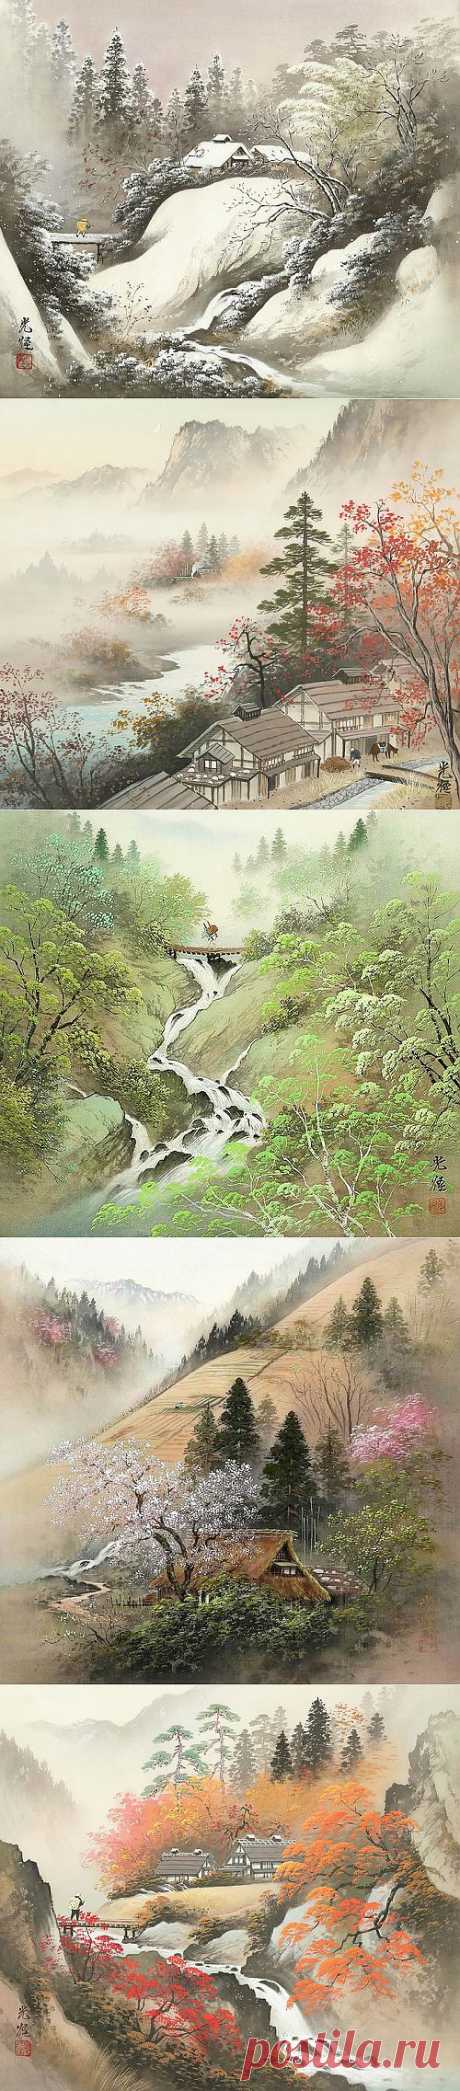 Шикарные пейзажи художника Koukei Kojima.